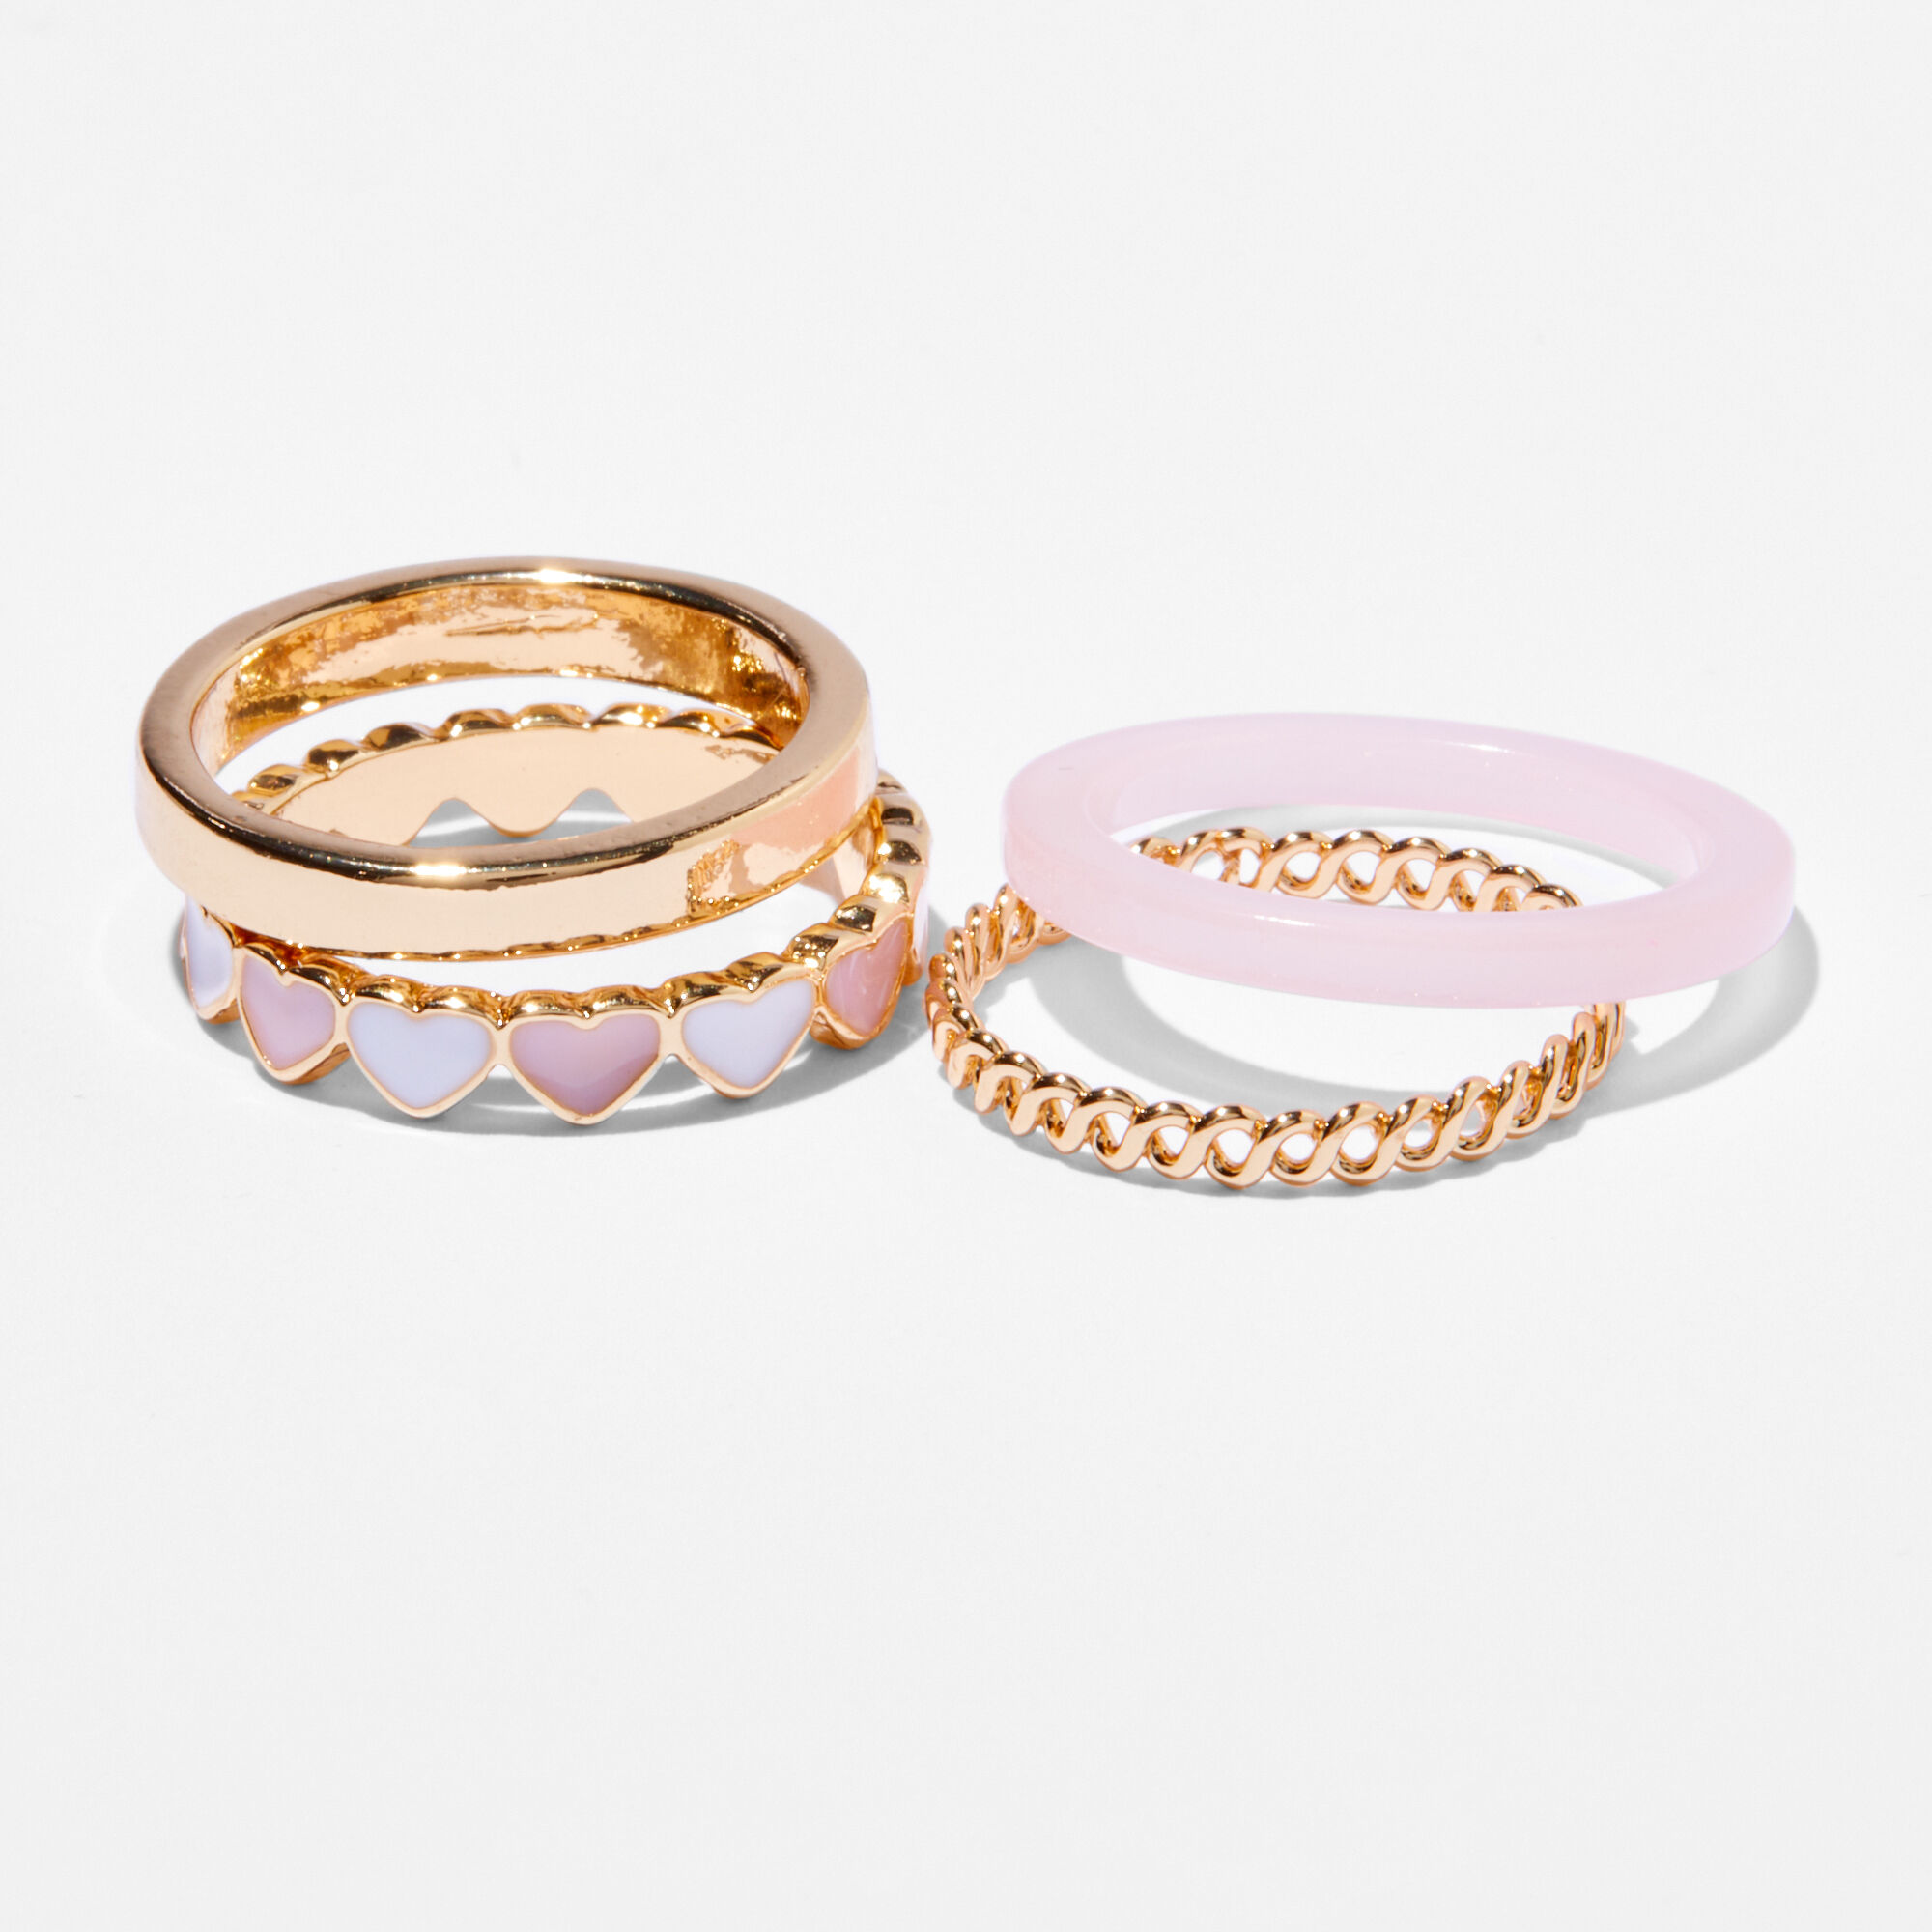 Pave Screw Bracelet Ring Set - Iced Out Bracelet Ring Set